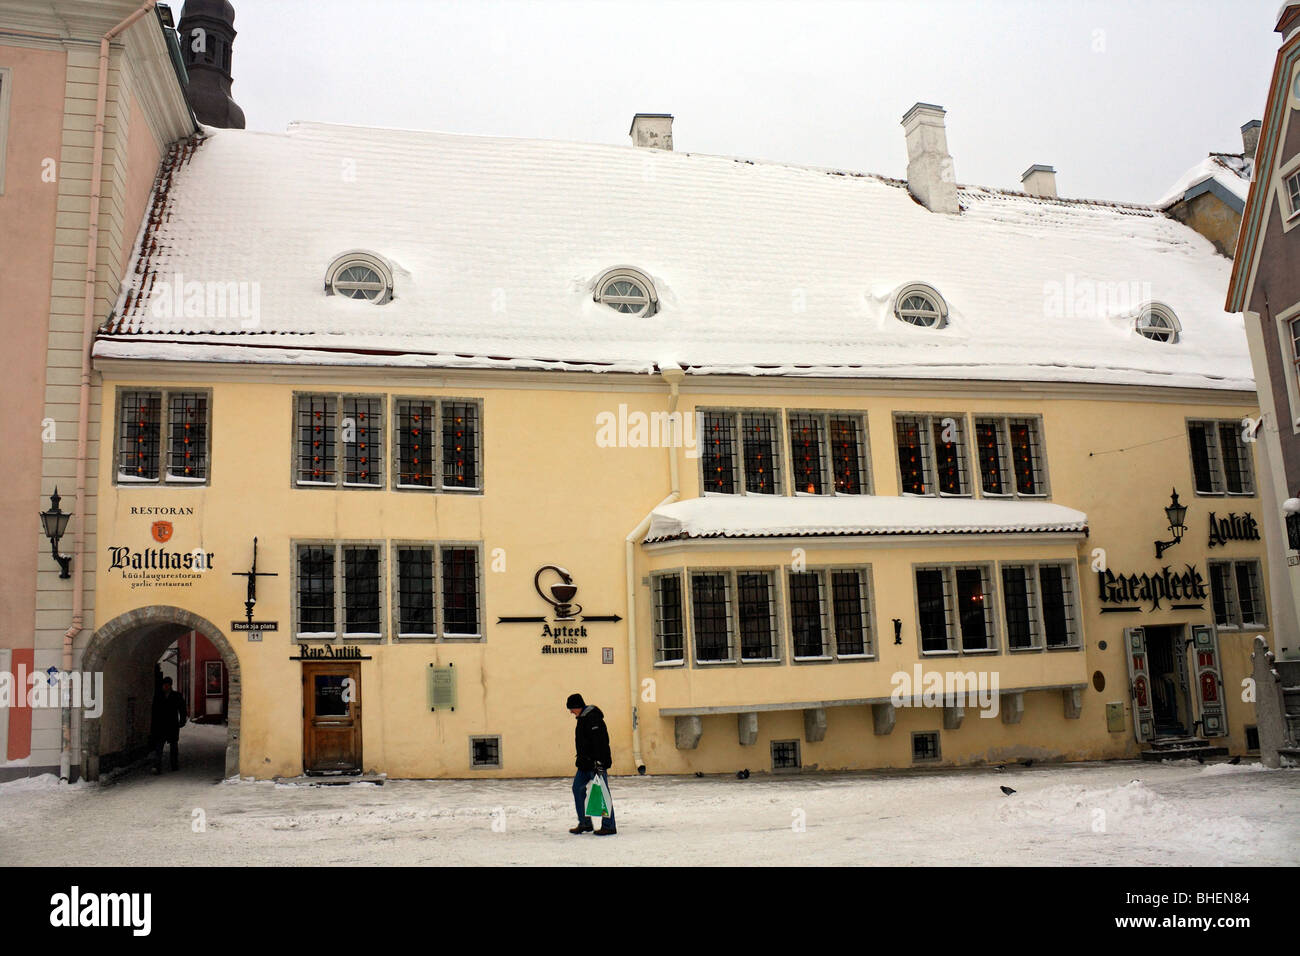 The Pharmacy in the old Town Hall Square - Raekoja plats Tallinn, Estonia. Stock Photo